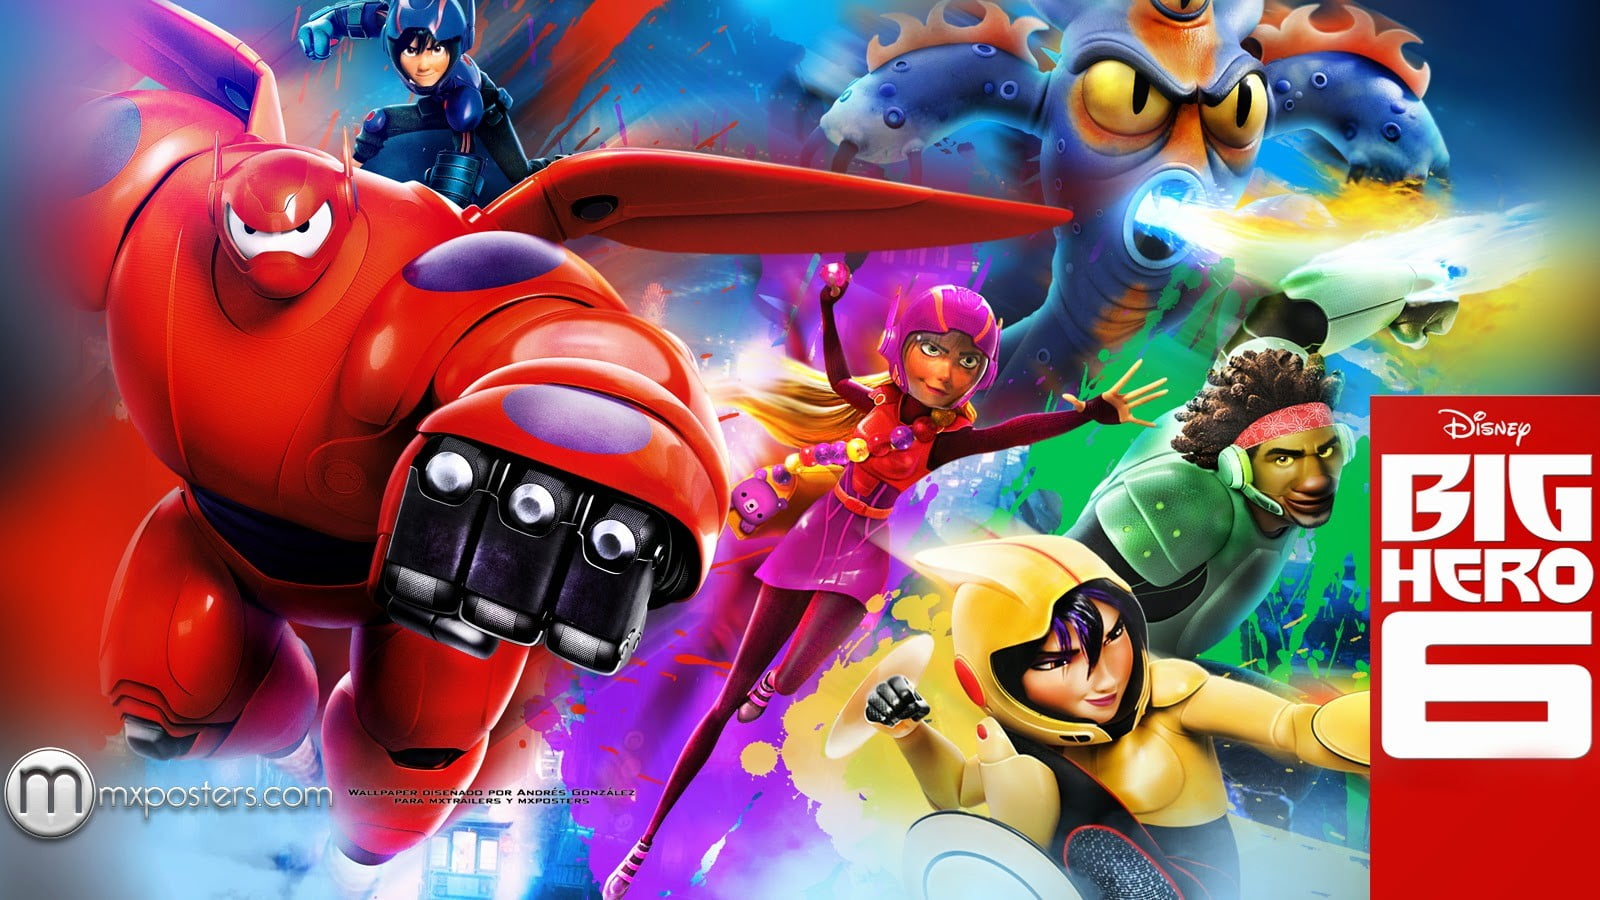 Disney Big Hero 6 graphic wallpaper, animated movies, Baymax (Big Hero 6)